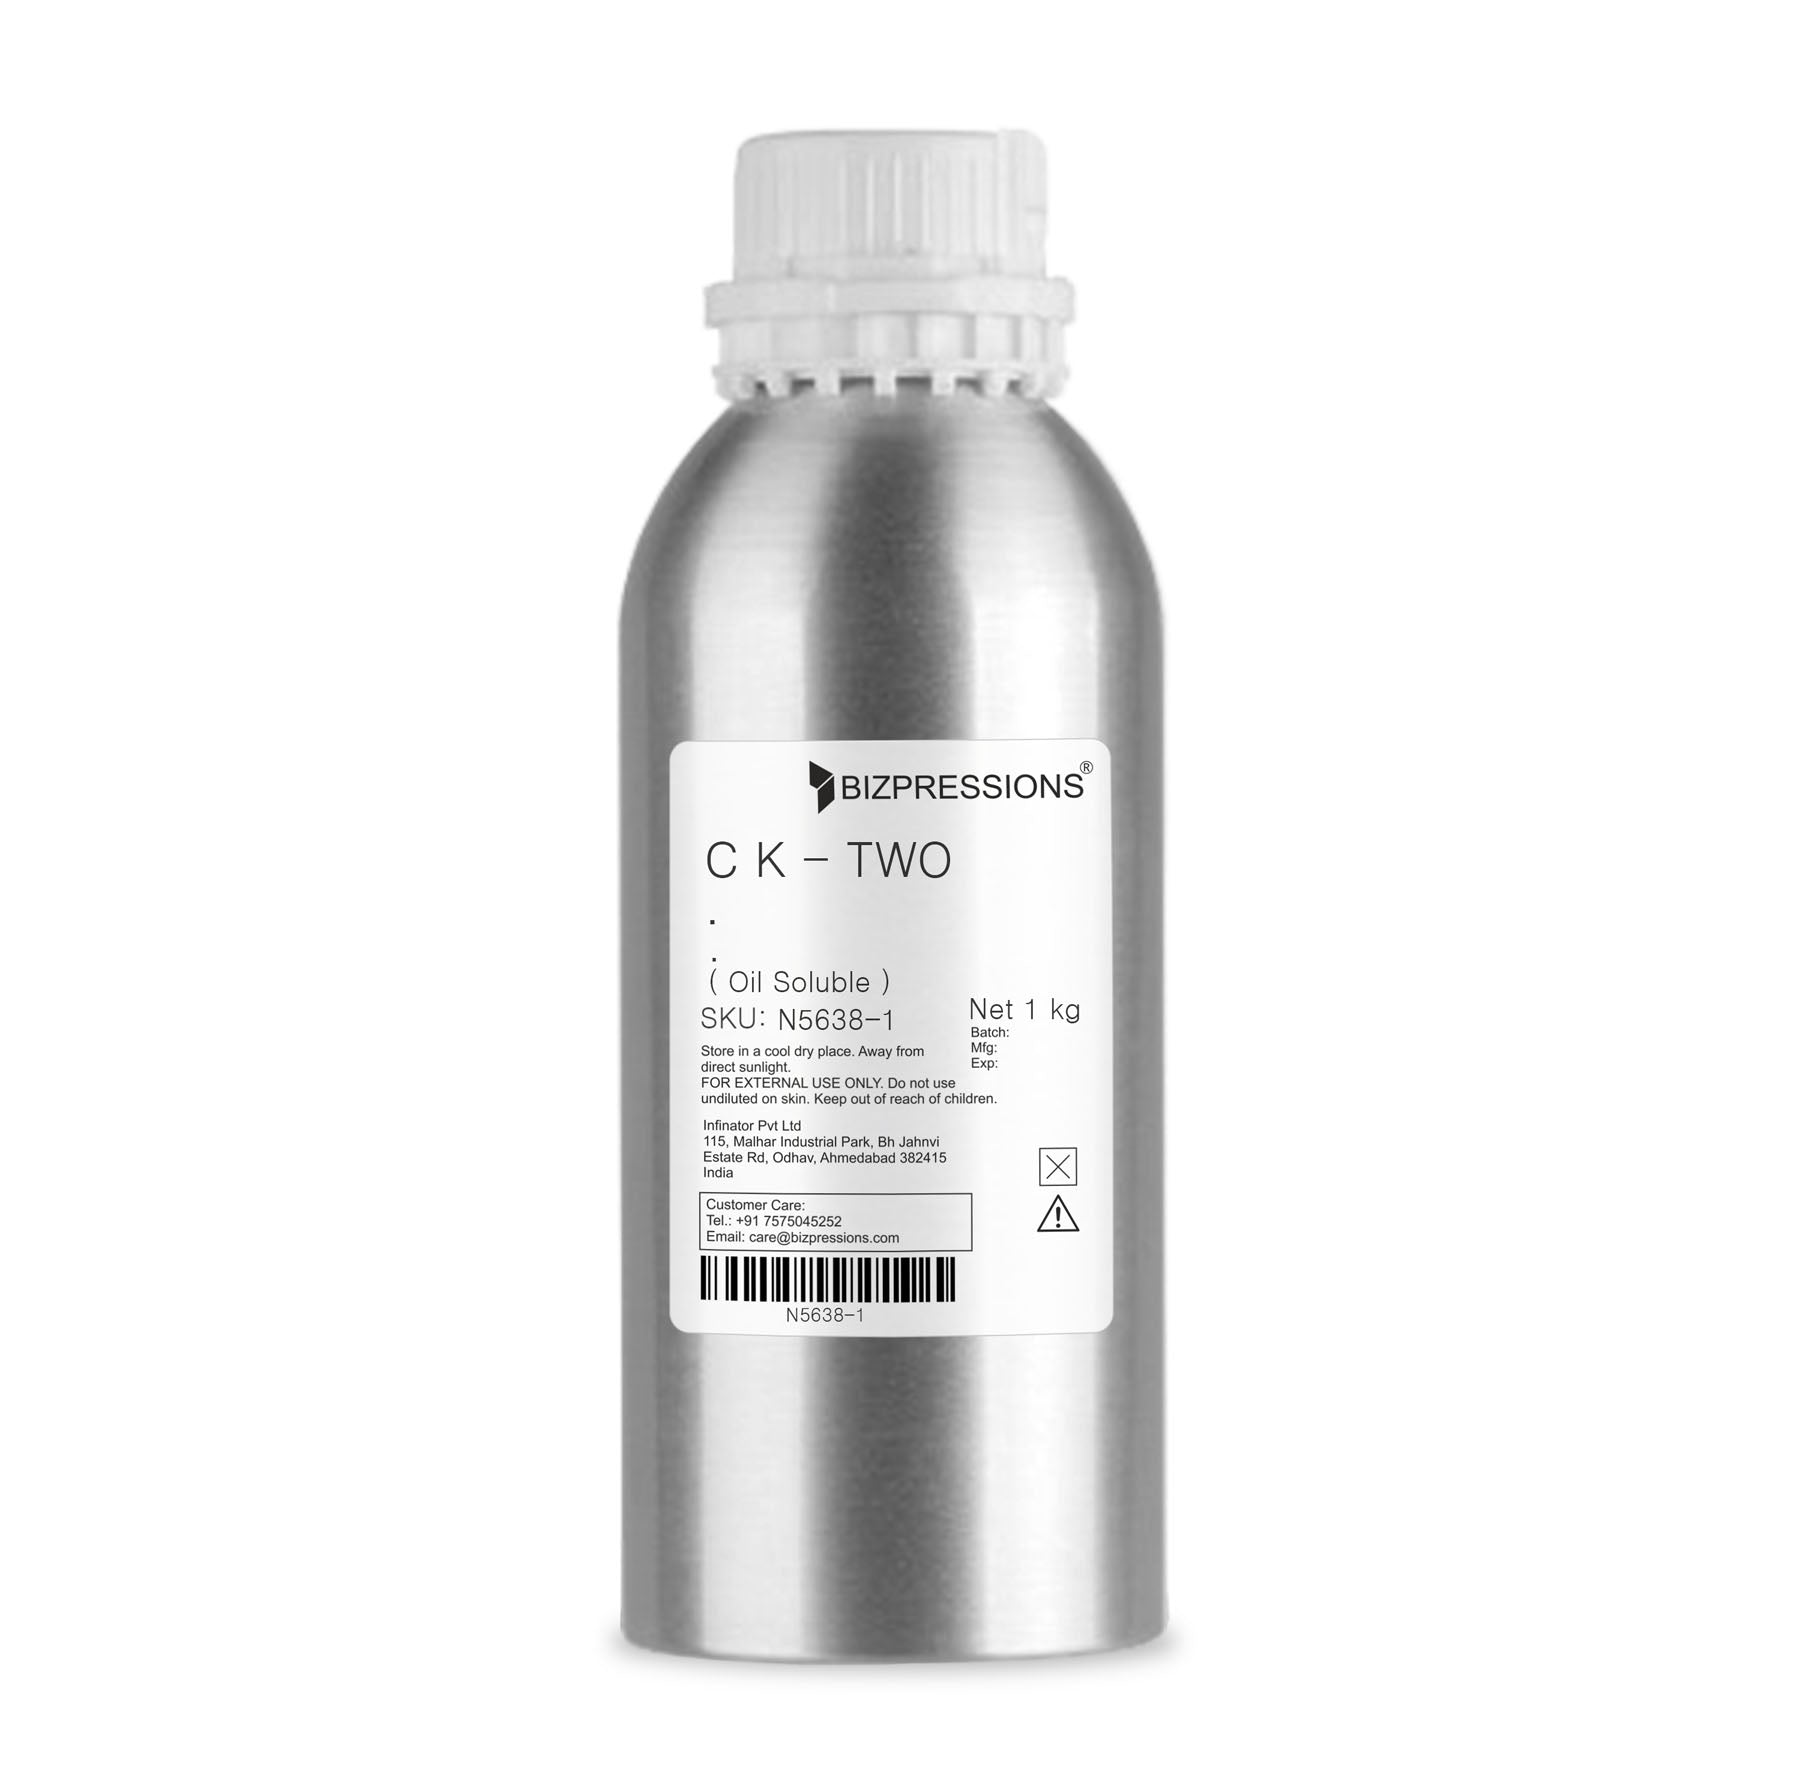 C K - TWO - Fragrance ( Oil Soluble ) - 1 kg